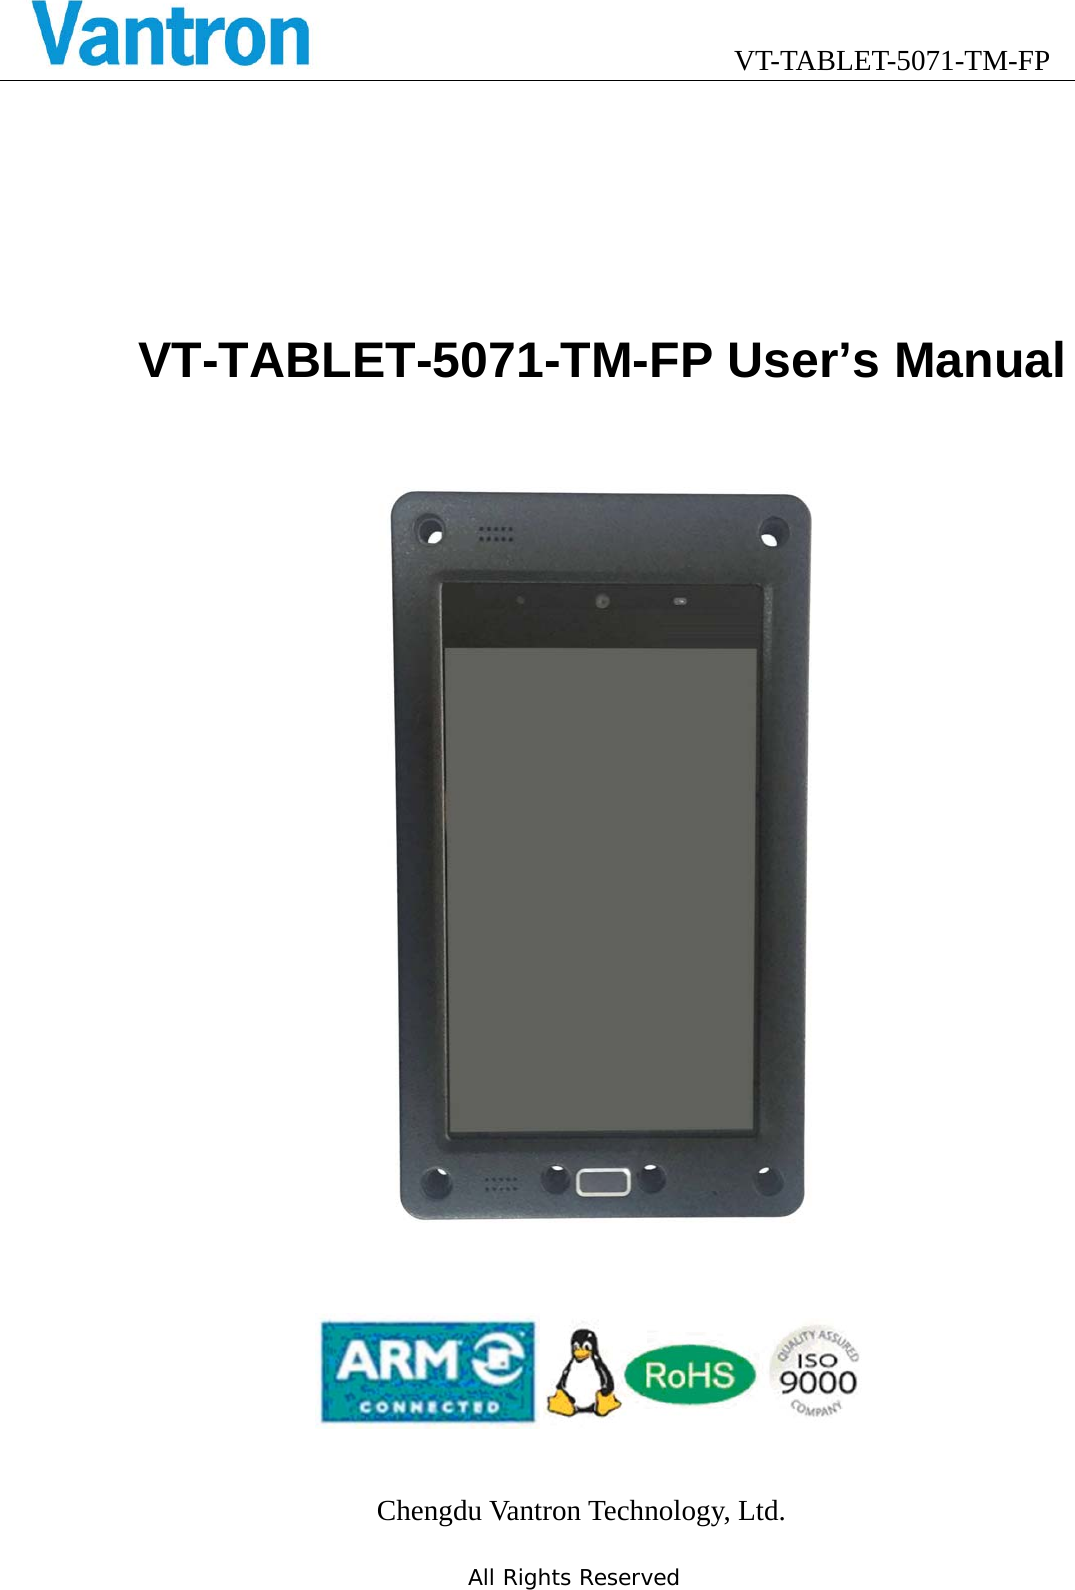                                 VT-TABLET-5071-TM-FP All Rights Reserved     VT-TABLET-5071-TM-FP User’s Manual                          Chengdu Vantron Technology, Ltd. 